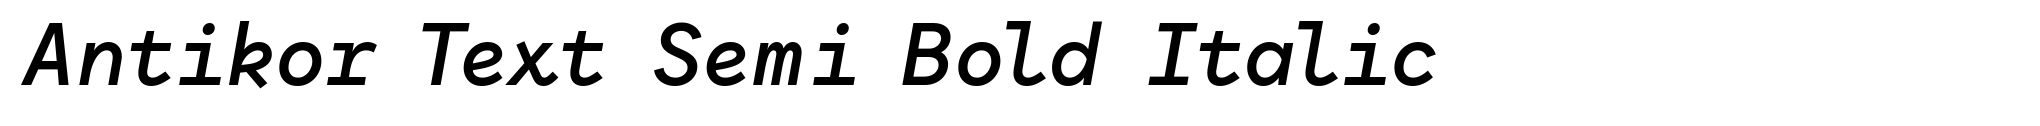 Antikor Text Semi Bold Italic image